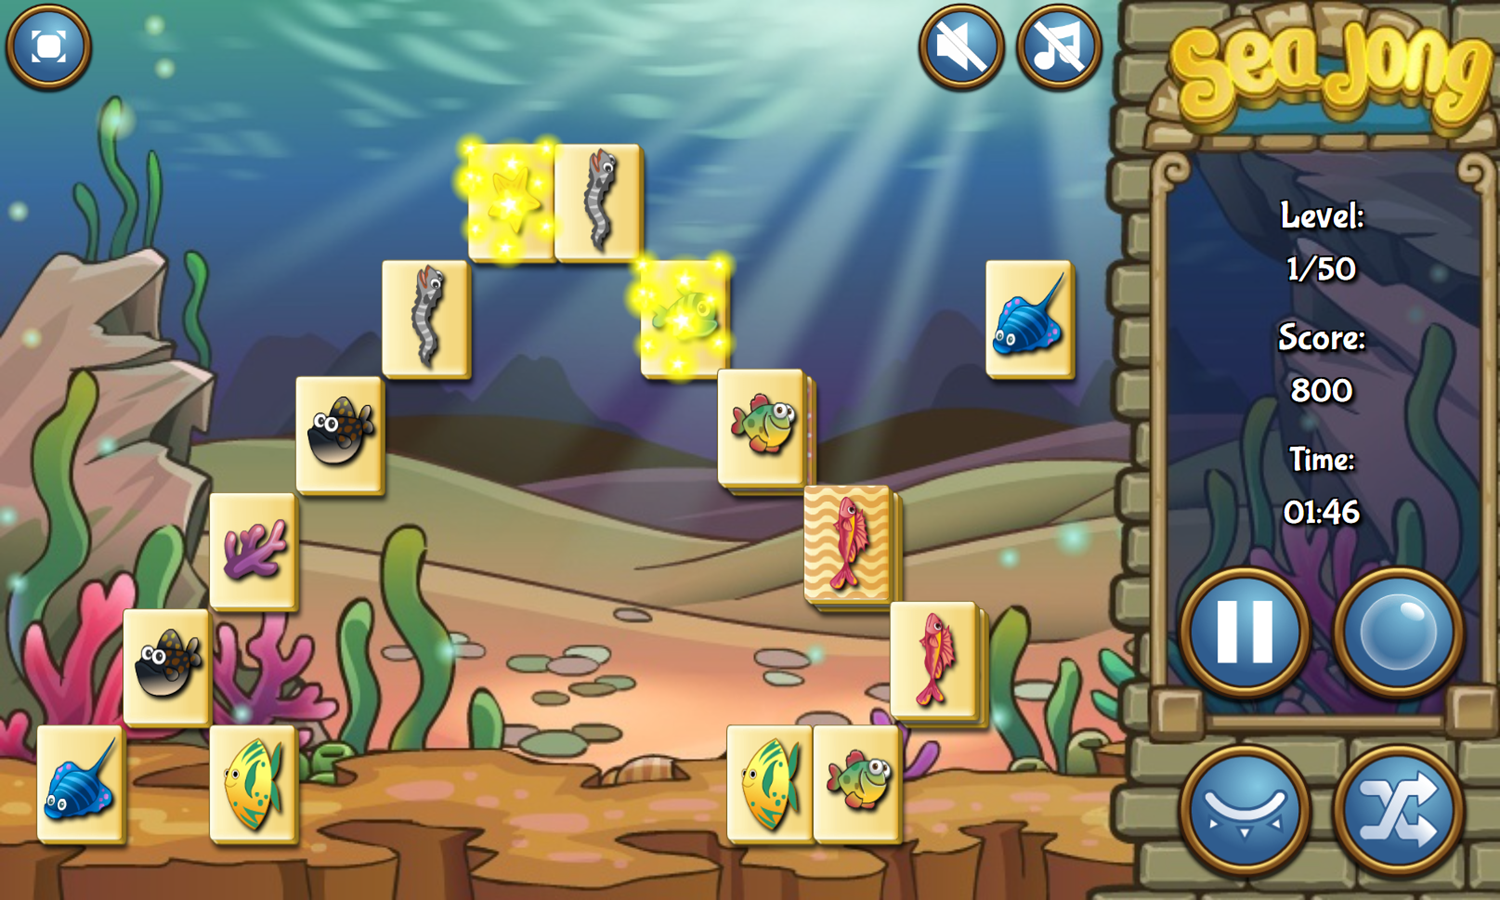 Seajong Game Level Play Screenshot.